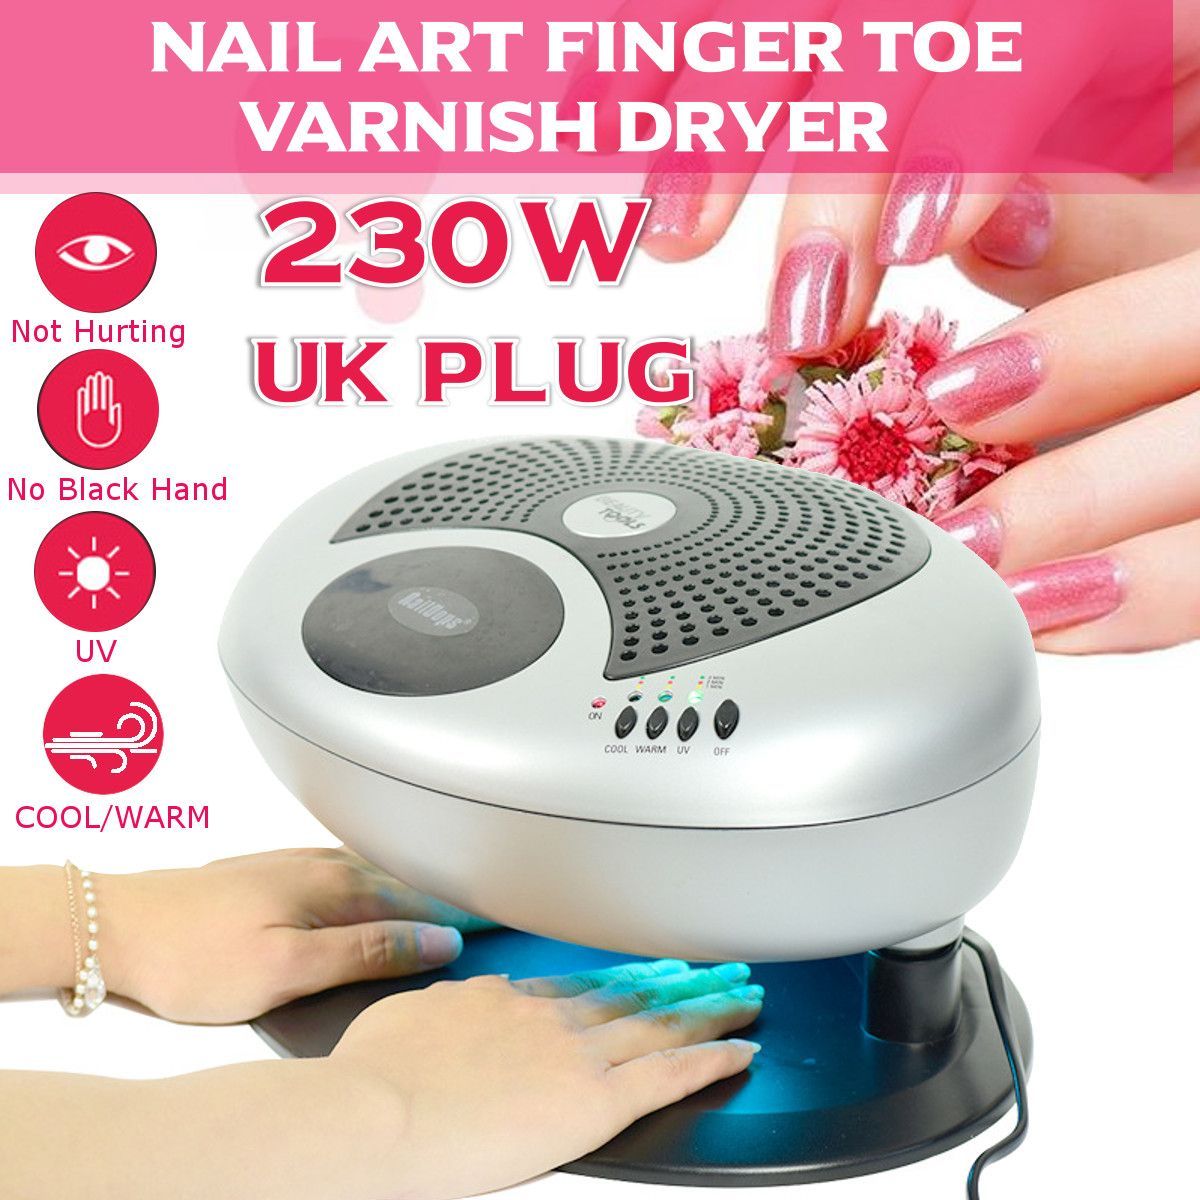 220-240V-230W-Nail-Art-Finger-Toe-Varnish-Dryer-Warm-amp-Cool-For-UV-Gel-Nail-Polish-Art-Machine-1611377